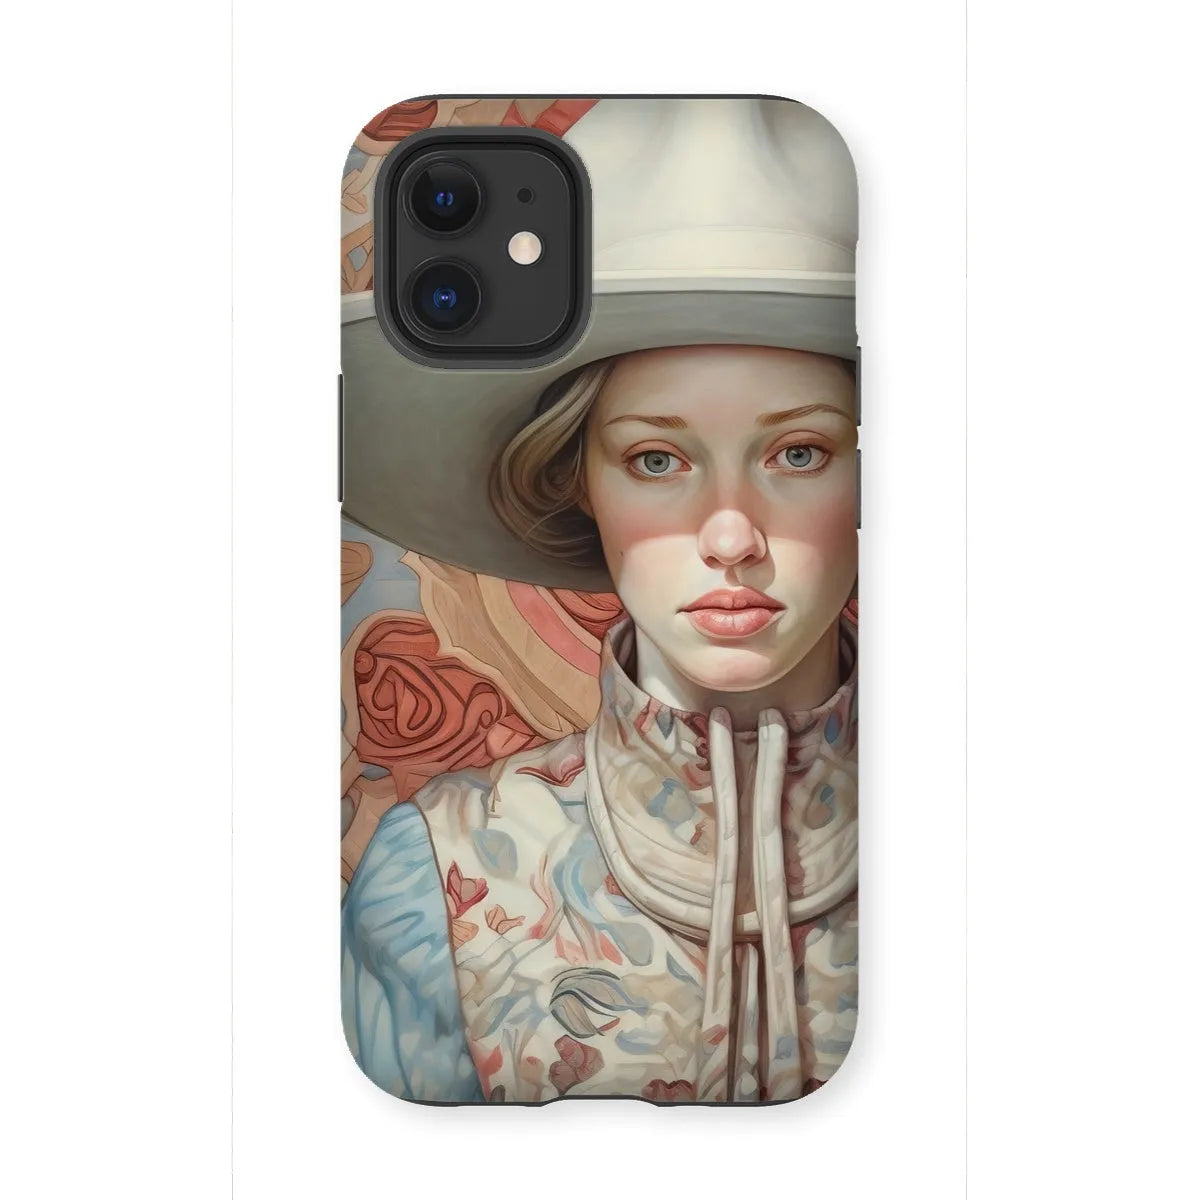 Lottie The Lesbian Cowgirl - Sapphic Art Phone Case - Iphone 12 Mini / Matte - Mobile Phone Cases - Aesthetic Art